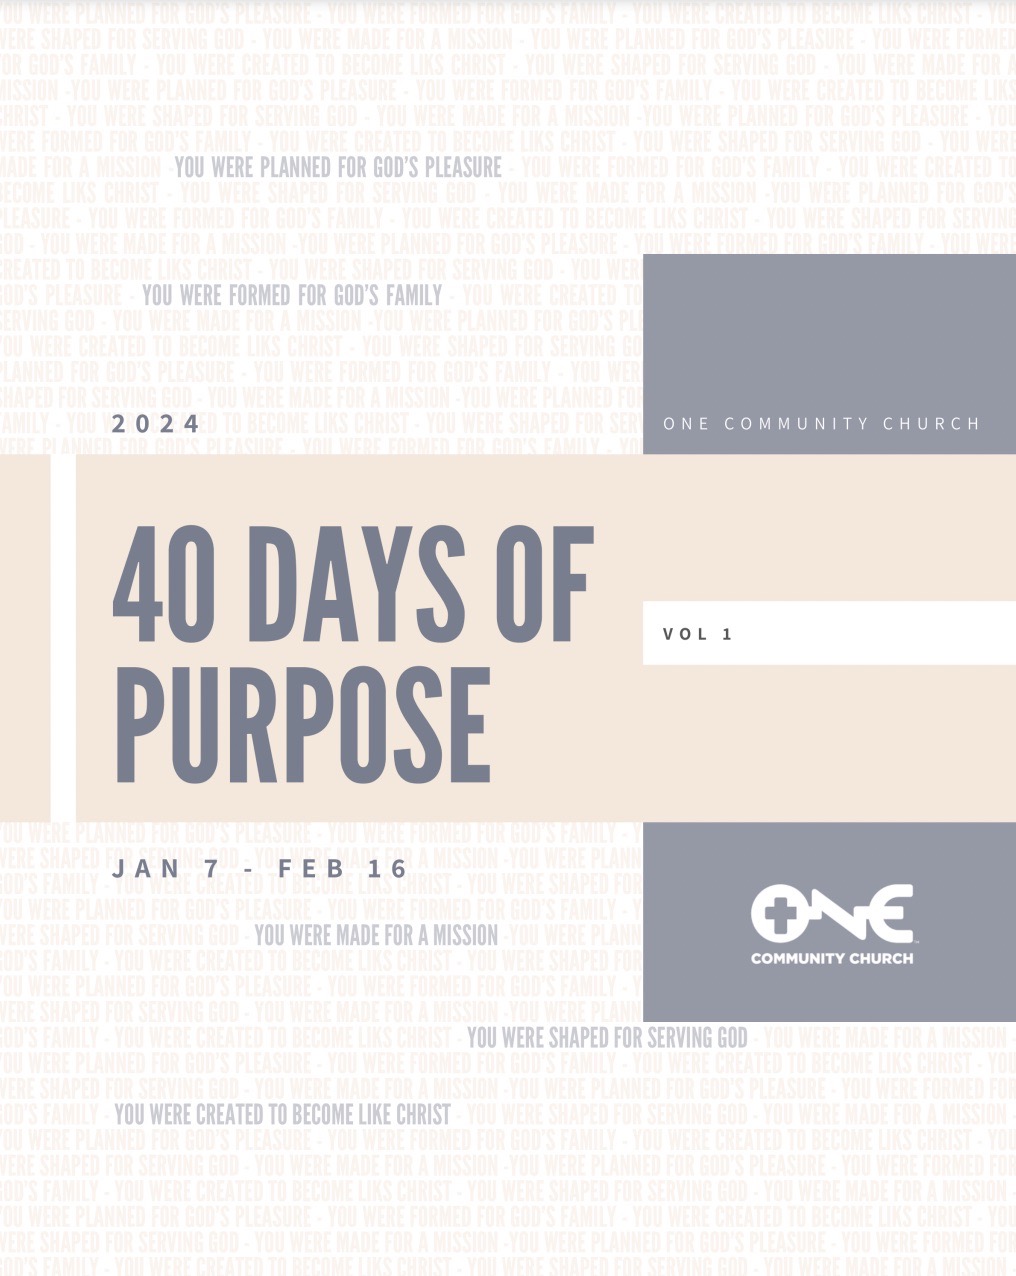 40 Days of Purpose Vol 1